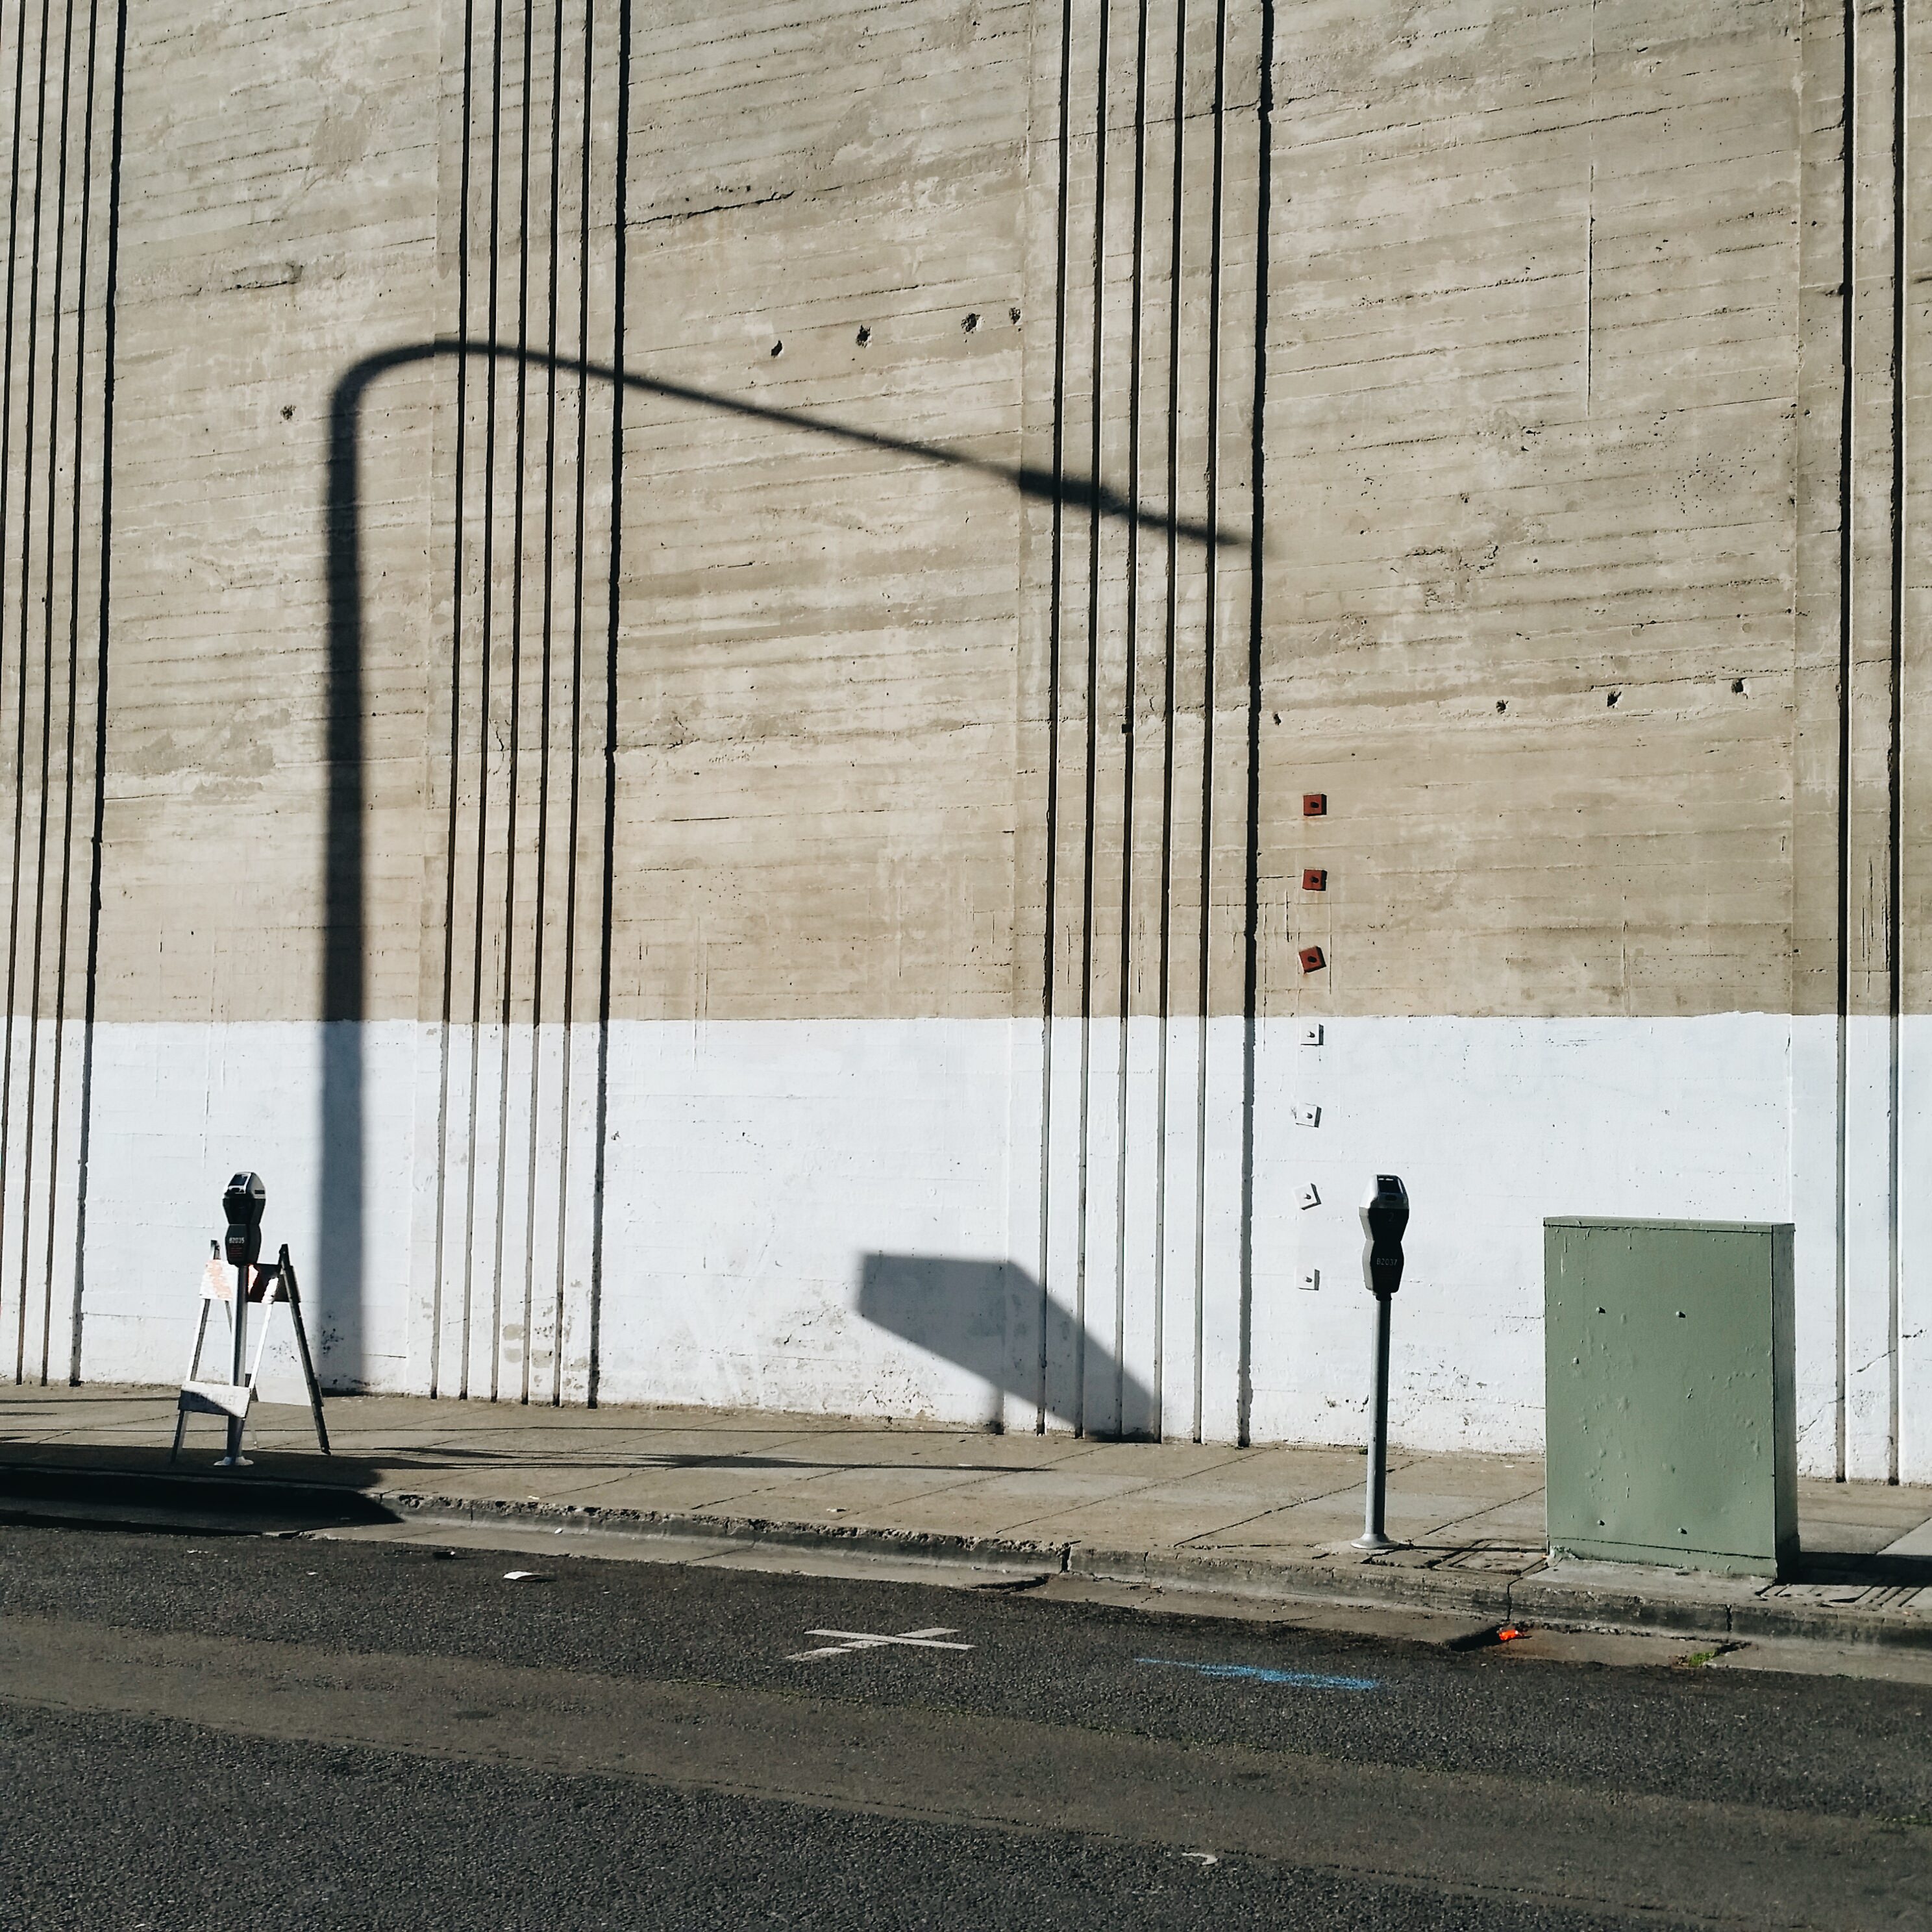 Urban landscape. Berkeley, 2015. Telephone pole.